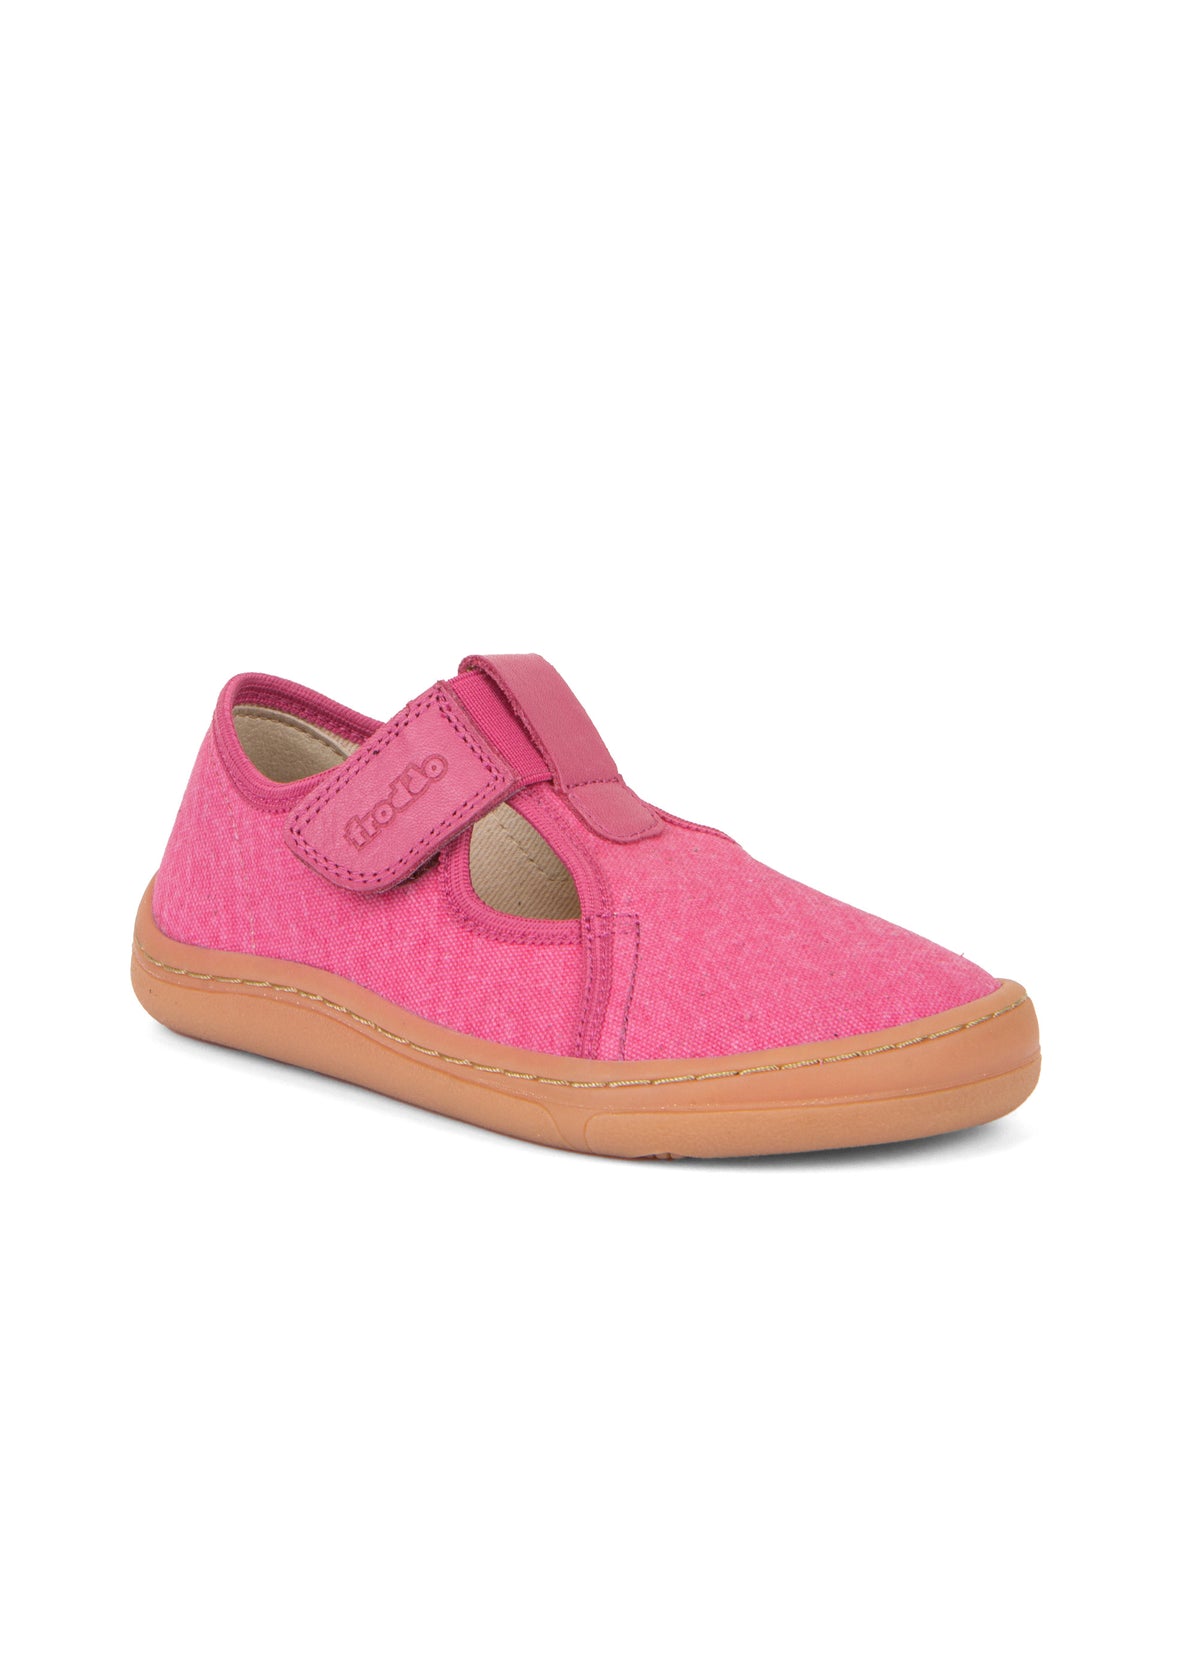 Children's barefoot shoes - pink, velcro fastening